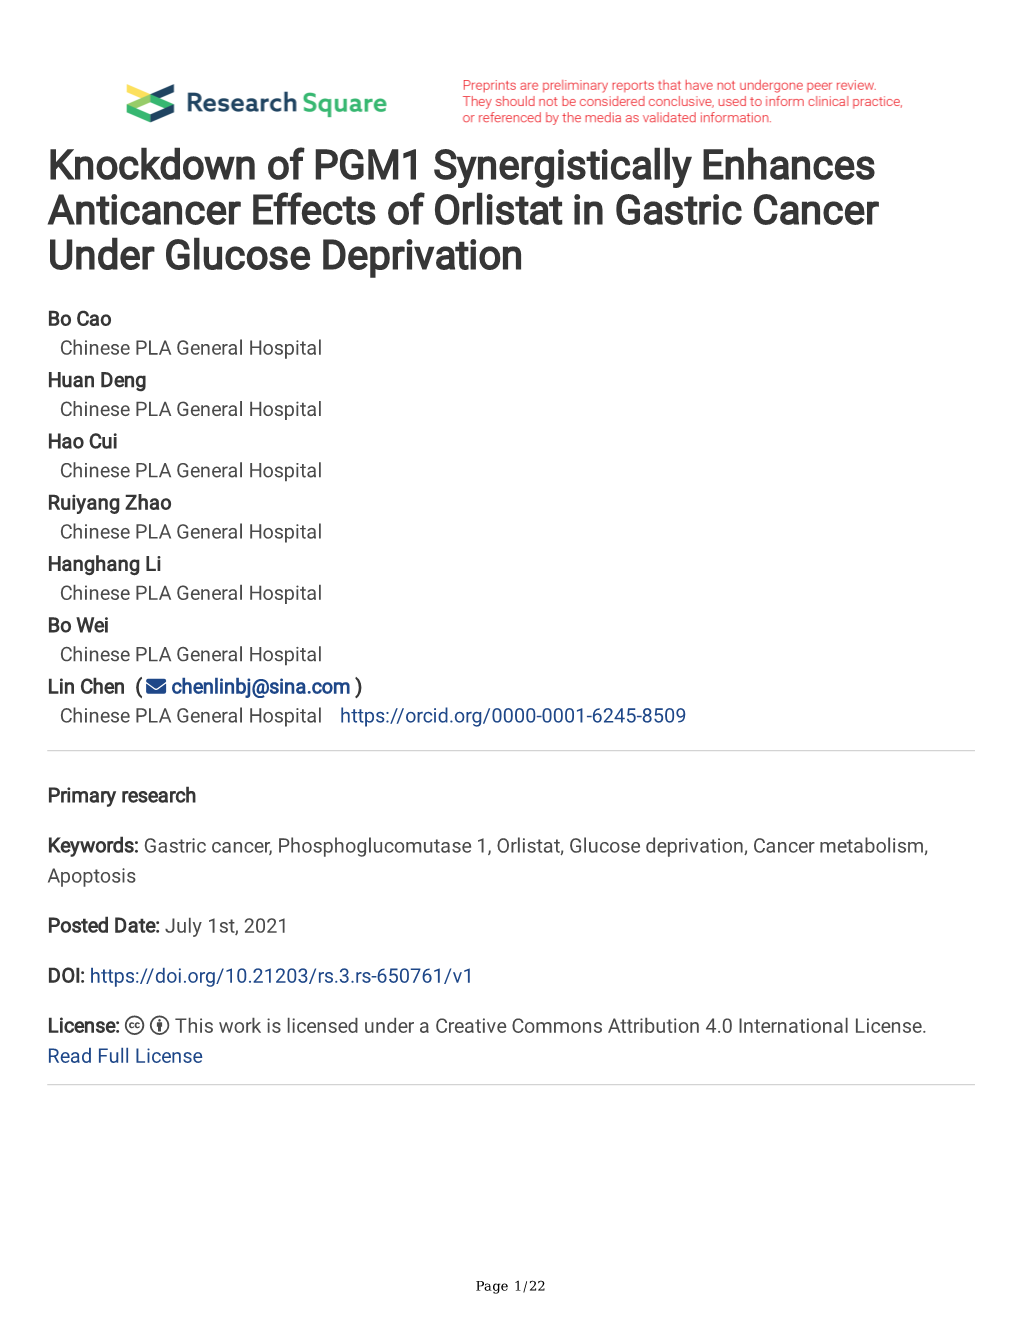 Knockdown of PGM1 Synergistically Enhances Anticancer Effects of Orlistat in Gastric Cancer Under Glucose Deprivation